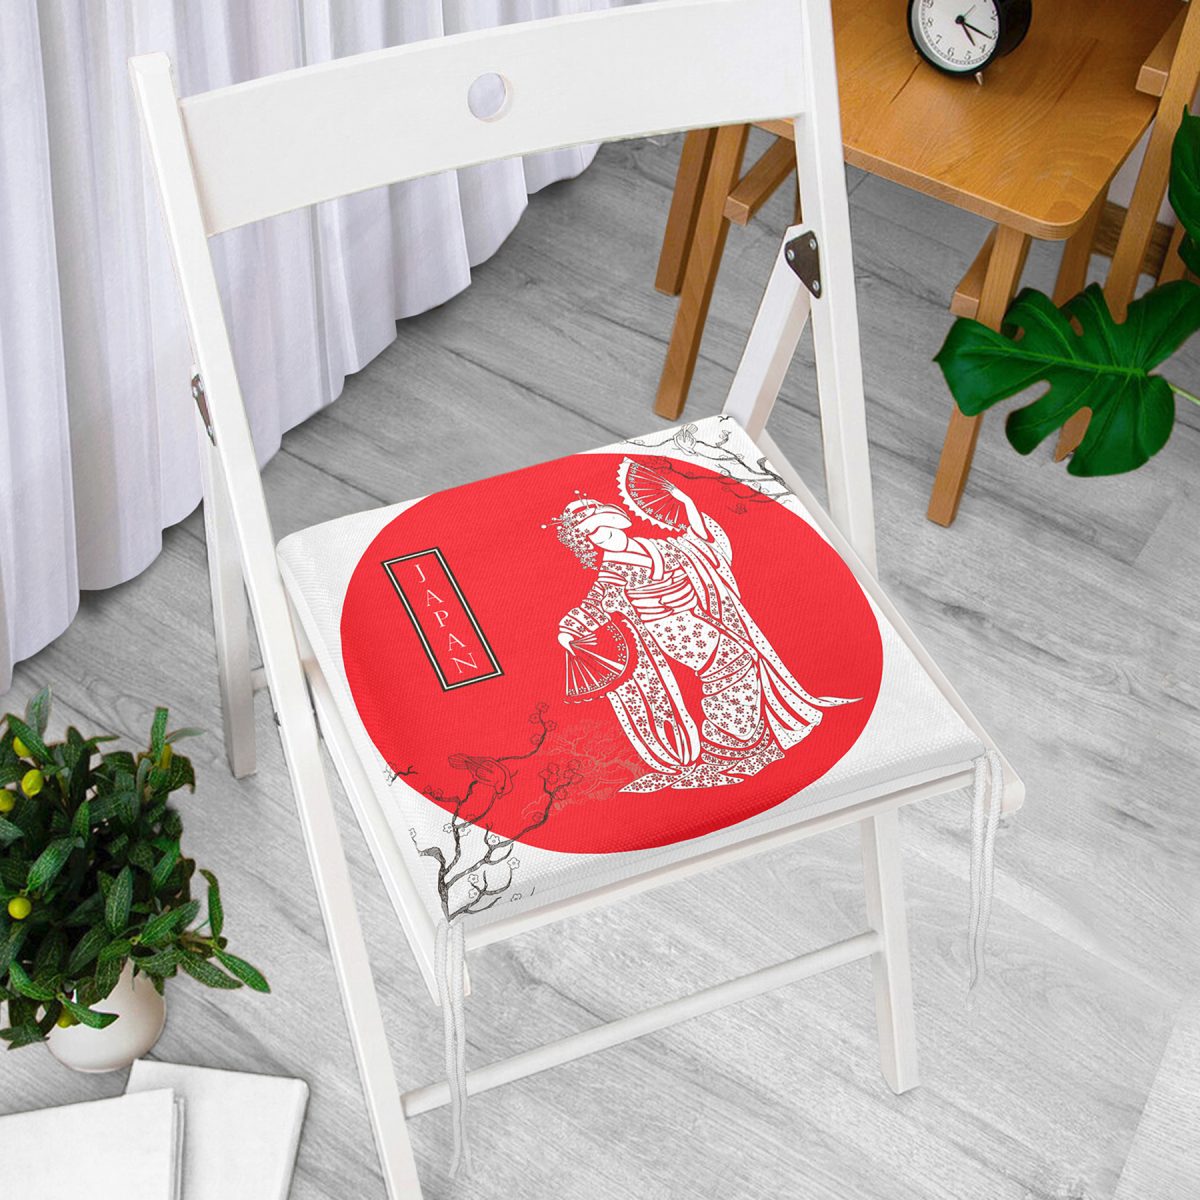 Ağaç Dal Motifli Japan Kız Motifli Dekoratif Fermuarlı Sandalye Minderi Realhomes